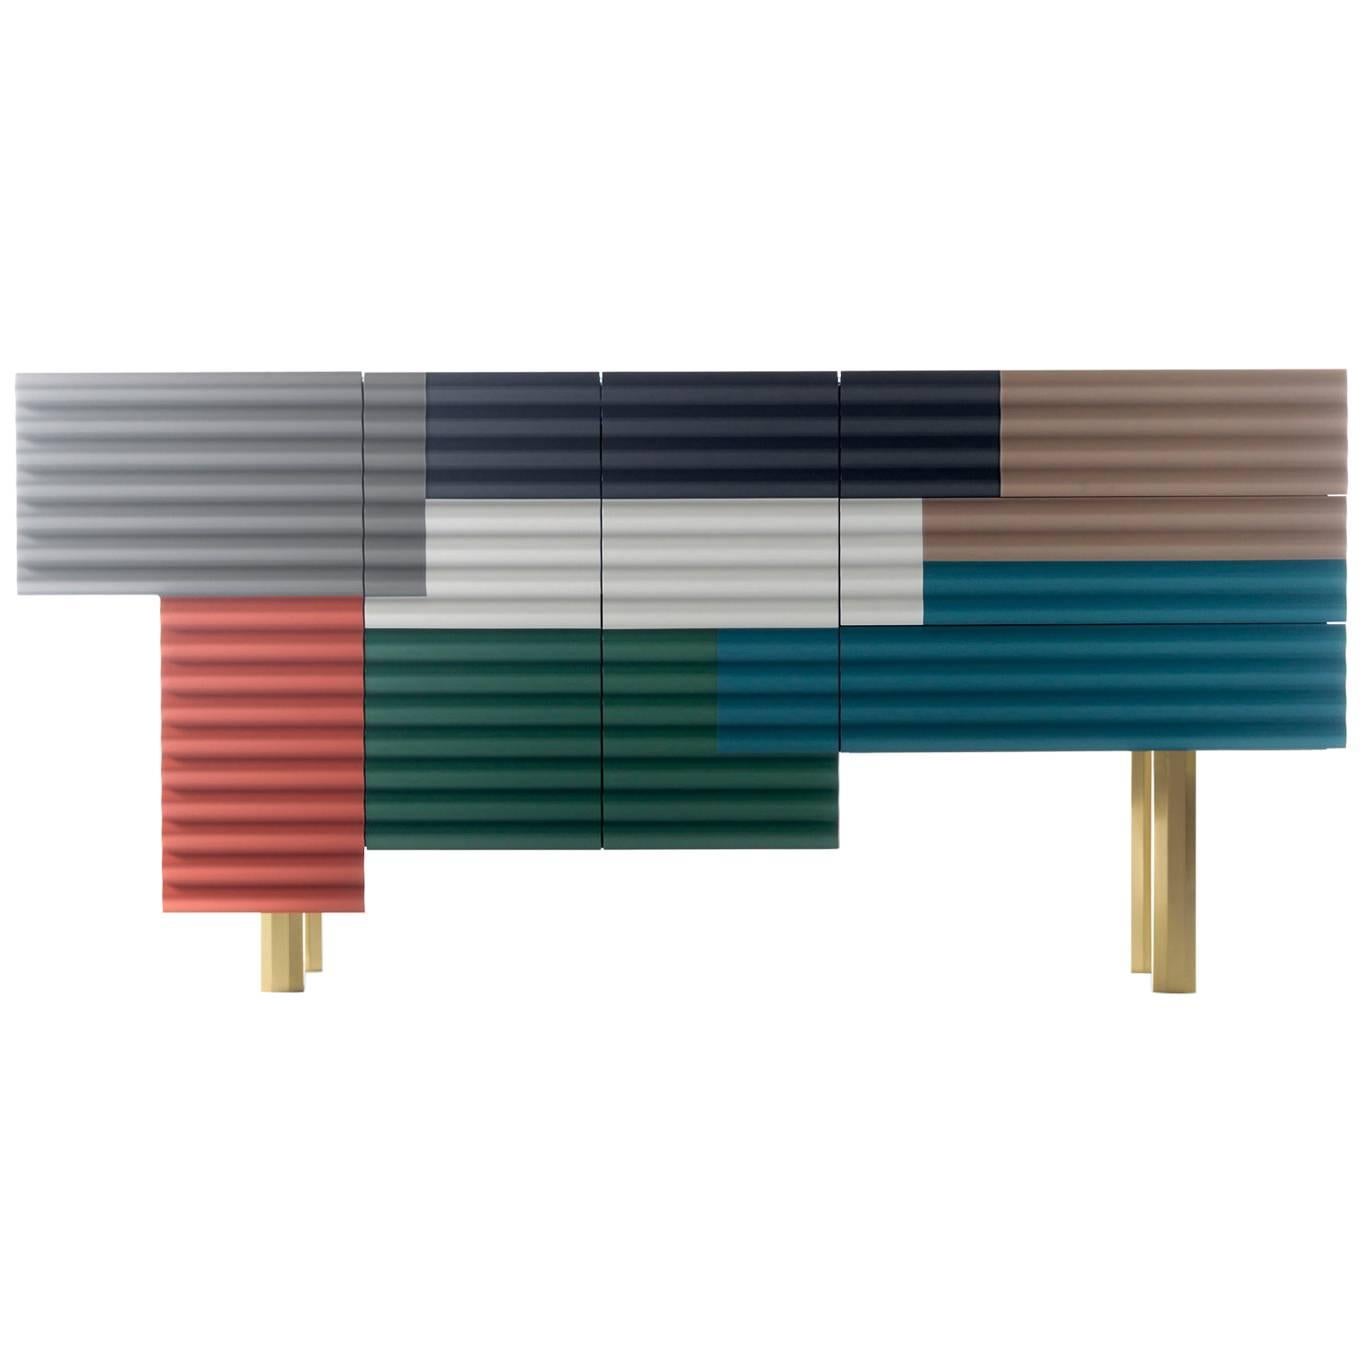  Buffet contemporain coloré "Summer Shanty" Porte pliante + tiroirs 